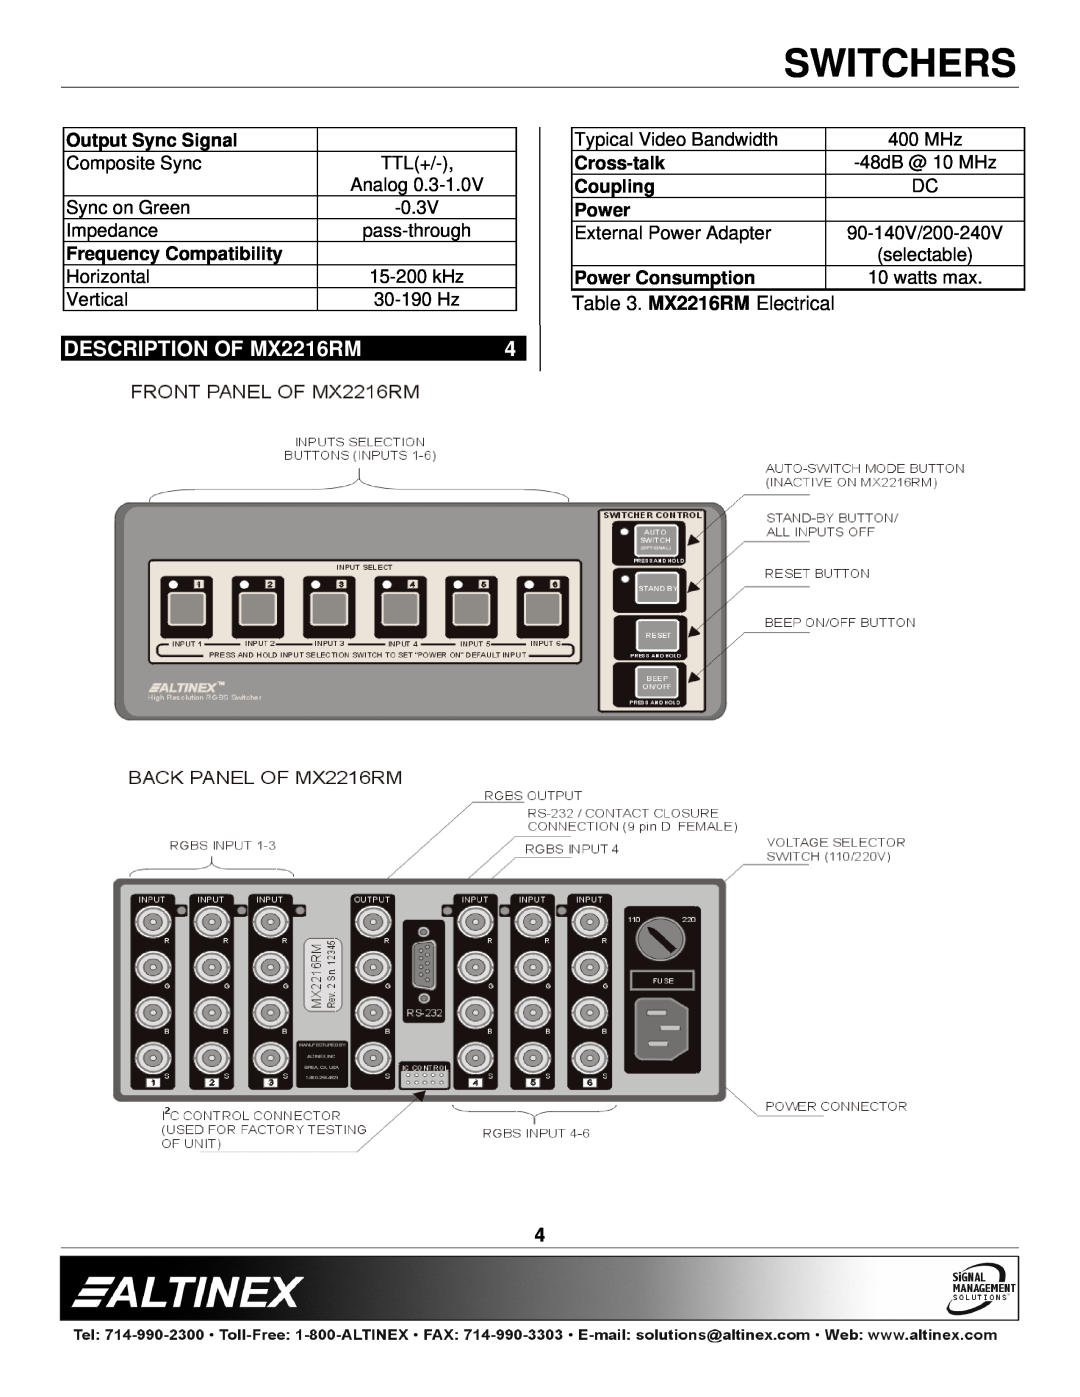 Altinex manual DESCRIPTION OF MX2216RM, Switchers, MX2216RM Electrical 